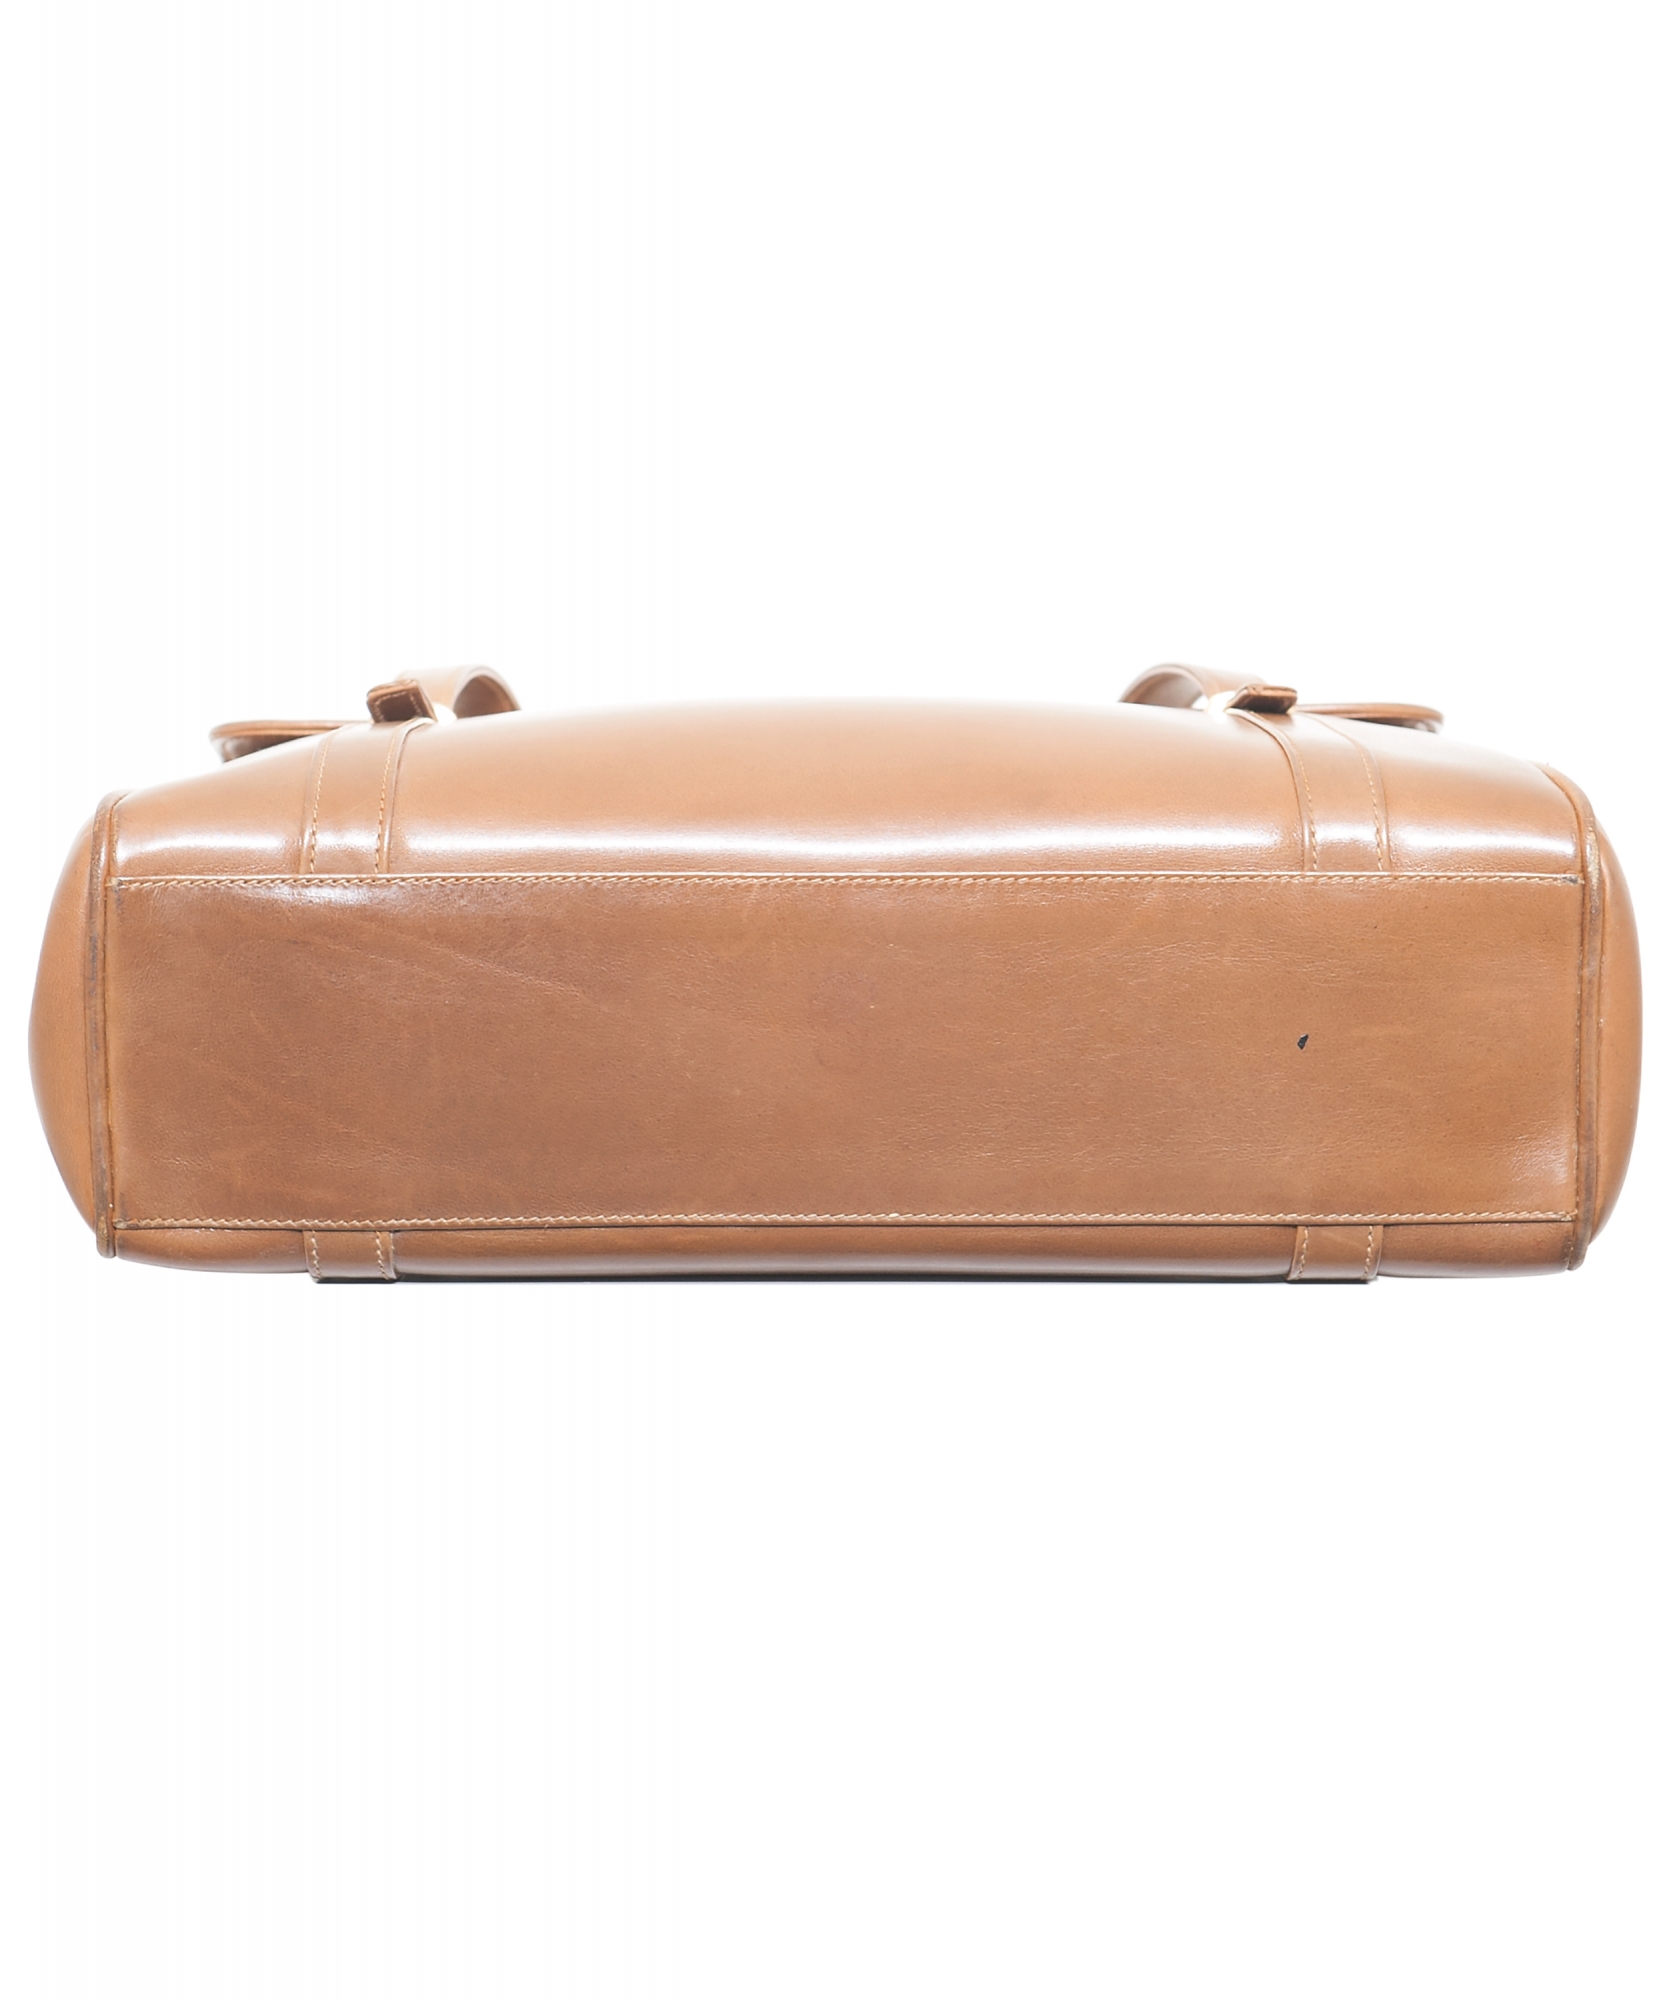 gucci tan leather purse